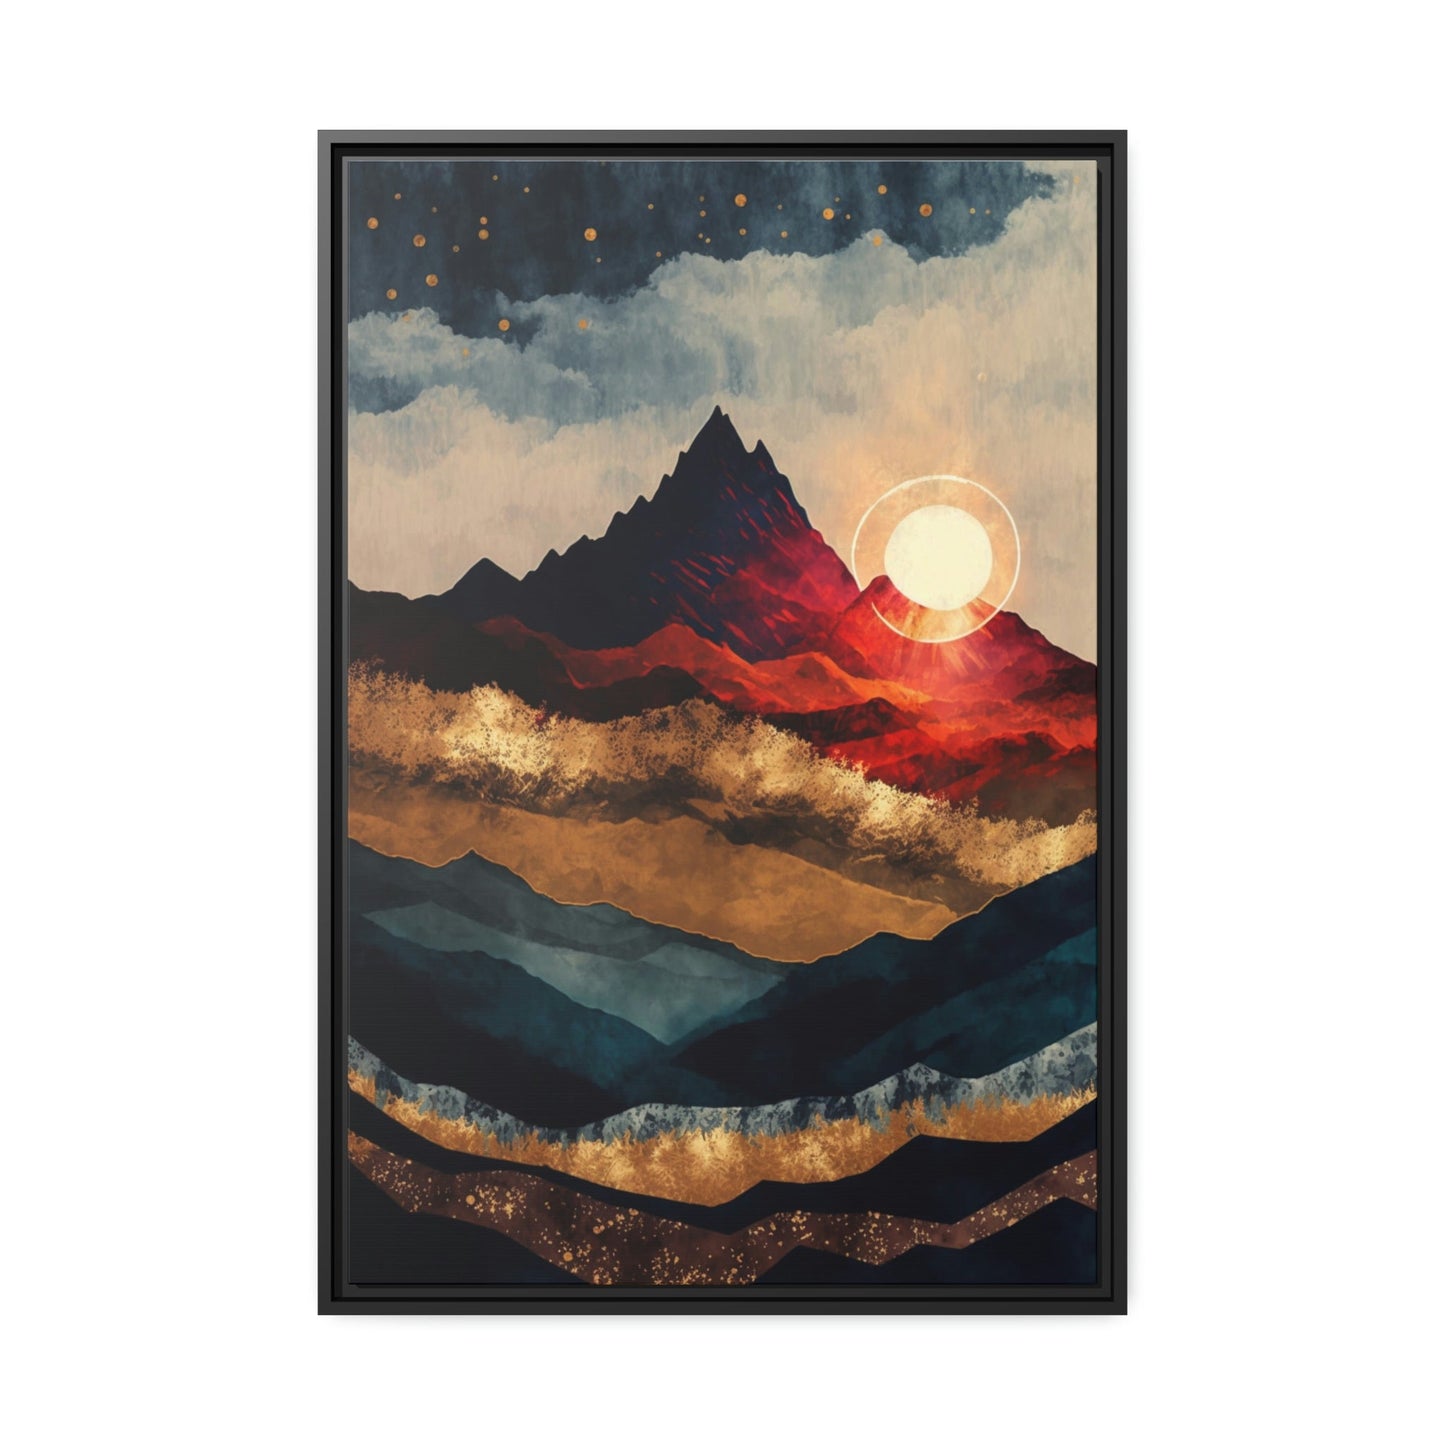 Luminous Vista: A Canvas Print of an Abstract Landscape at Sunset